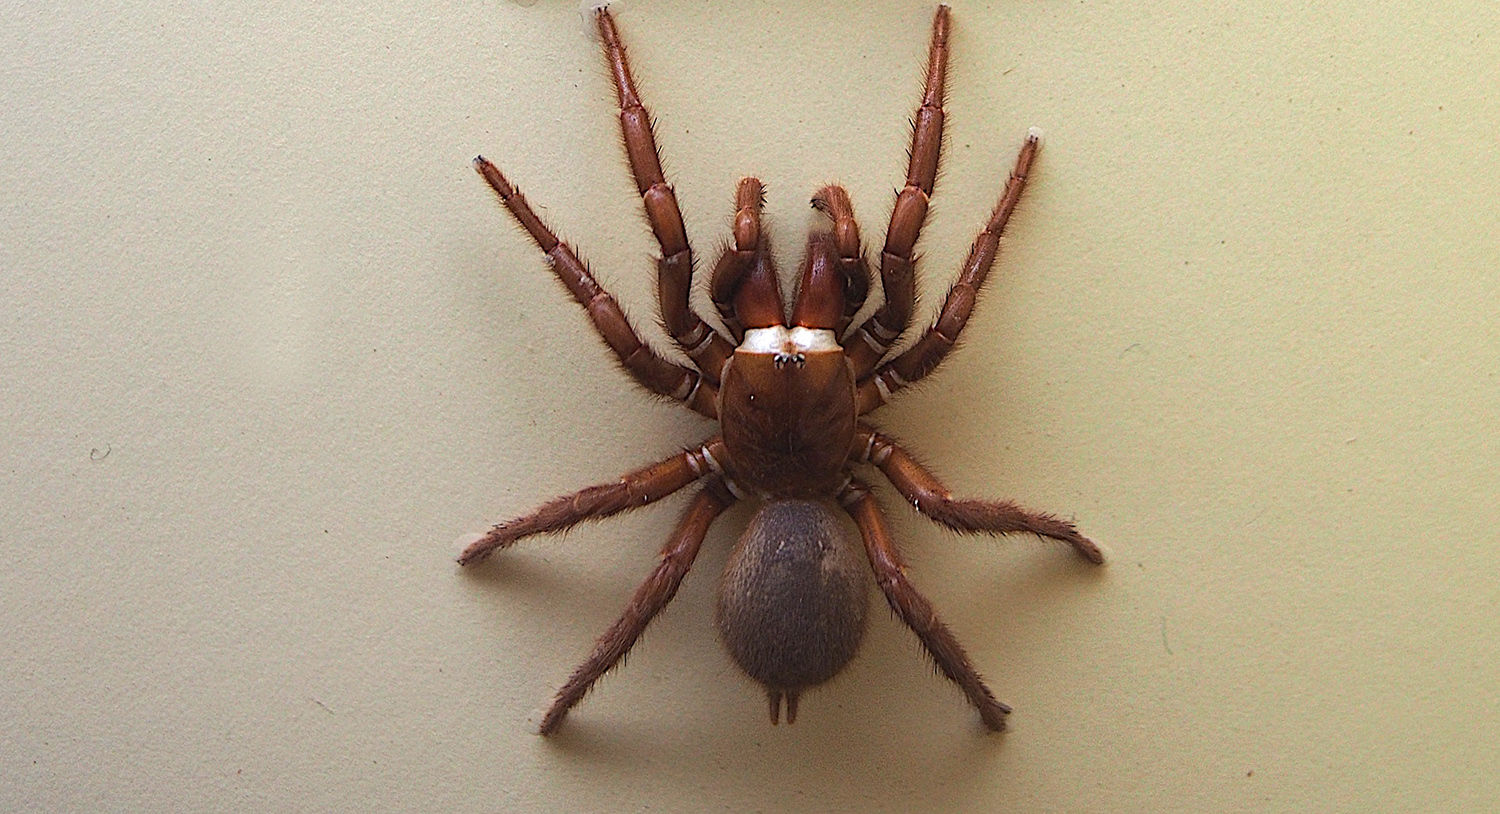 Female funnel web spider. Photo credit: Sputniktilt  via commons.wikimedia.org / CC BY-SA 3.0